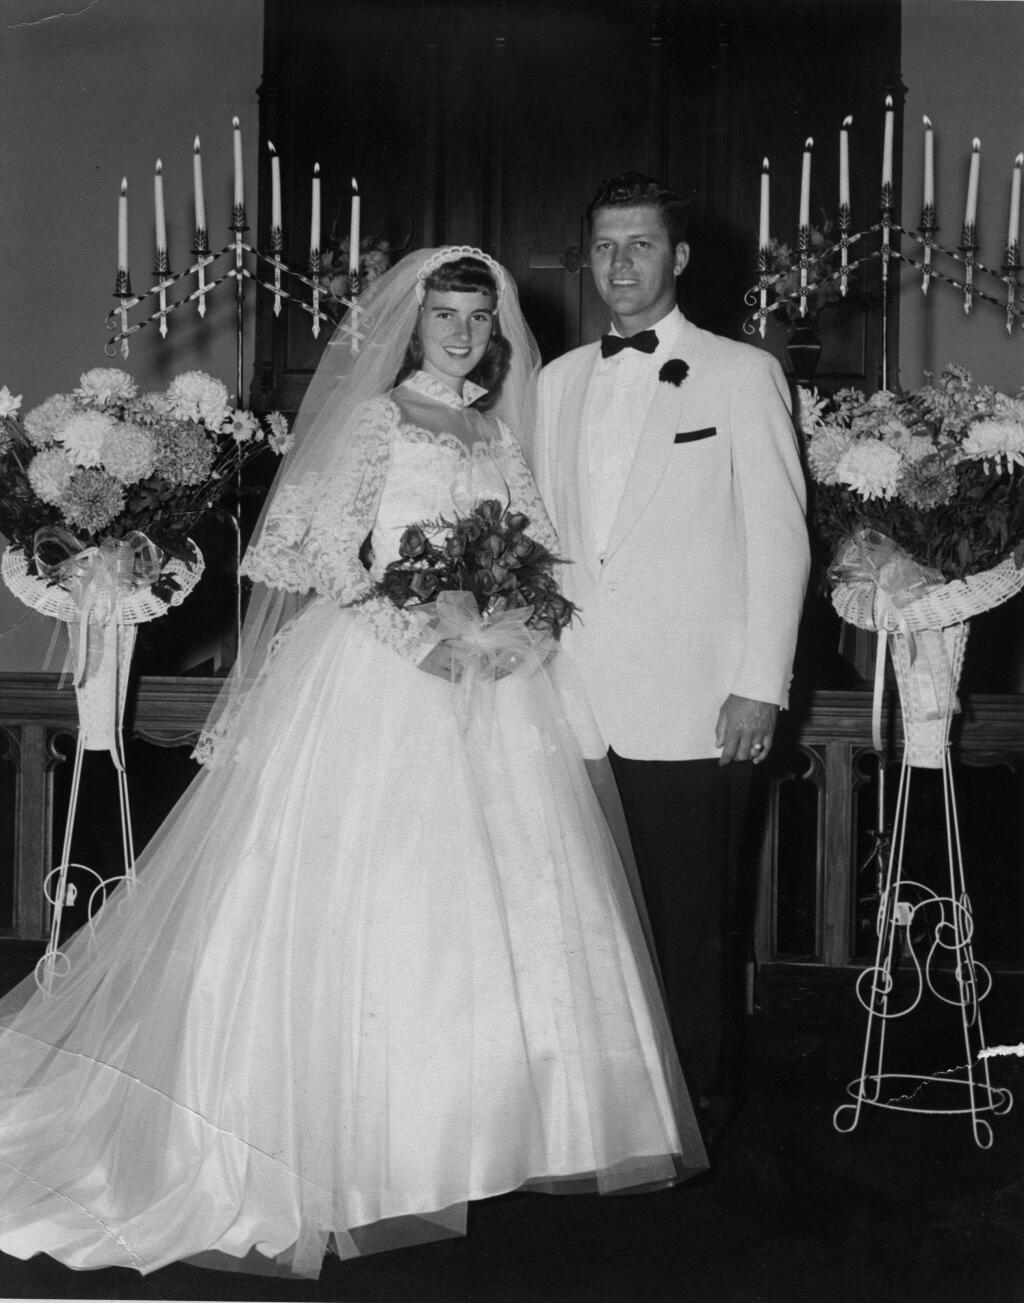 Jim and Phyllis Imand 60th wedding anniversary 10.15